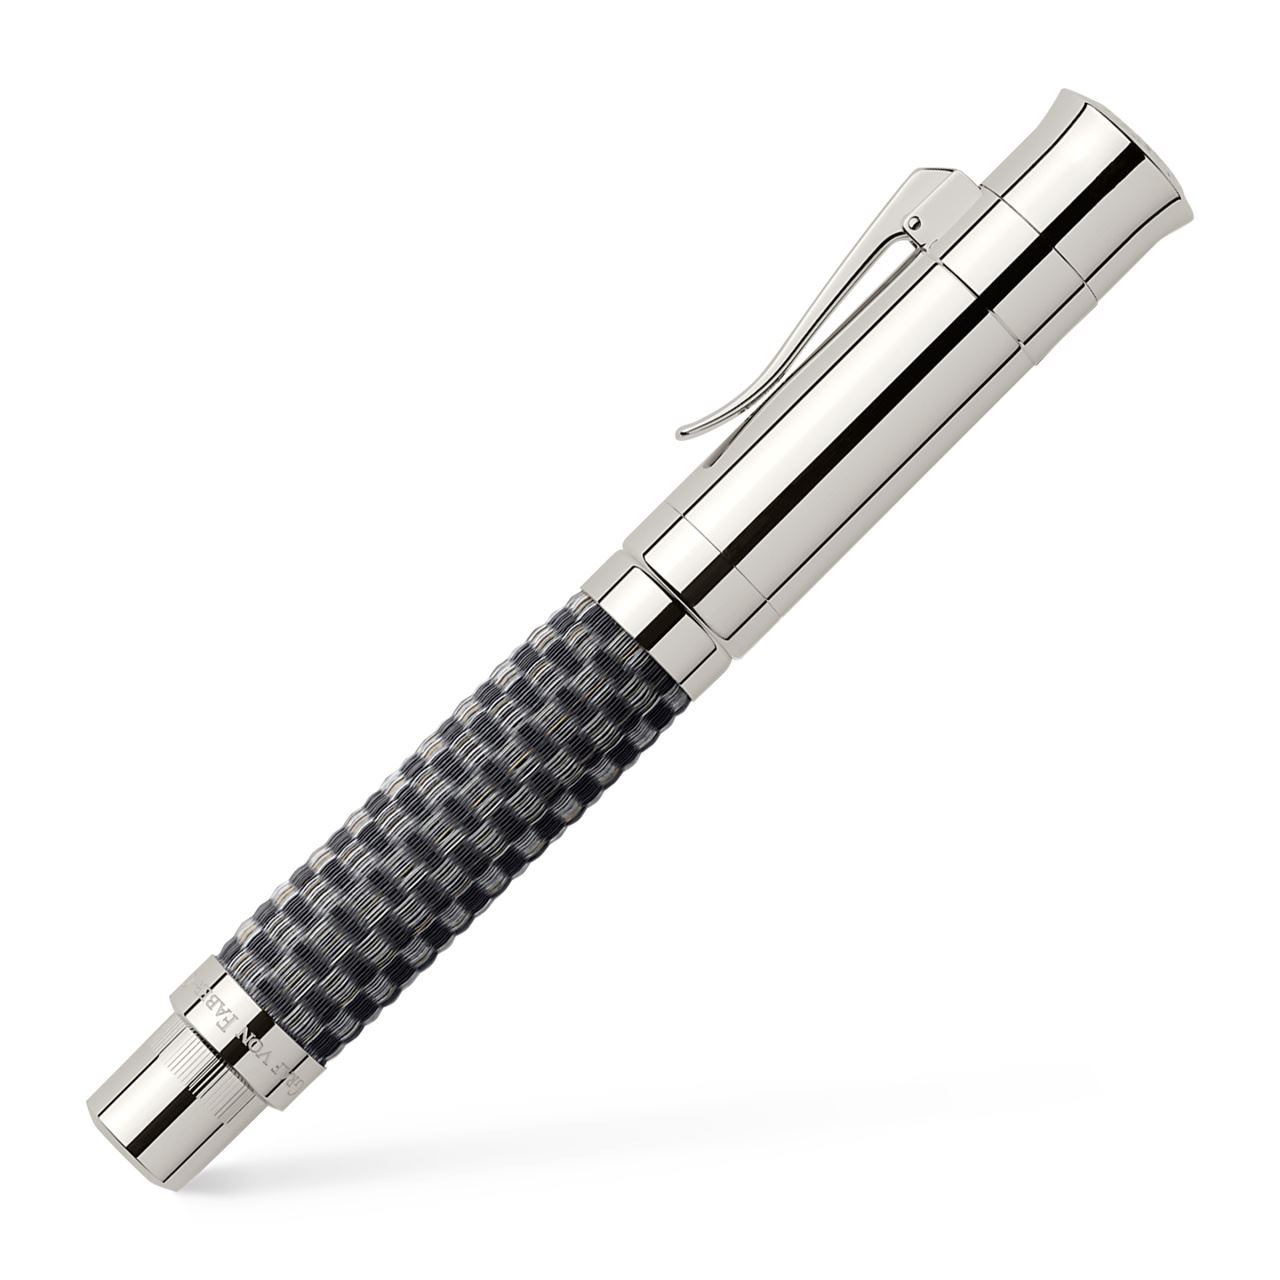 Graf-von-Faber-Castell - Fountain pen Pen of the Year 2009 Medium